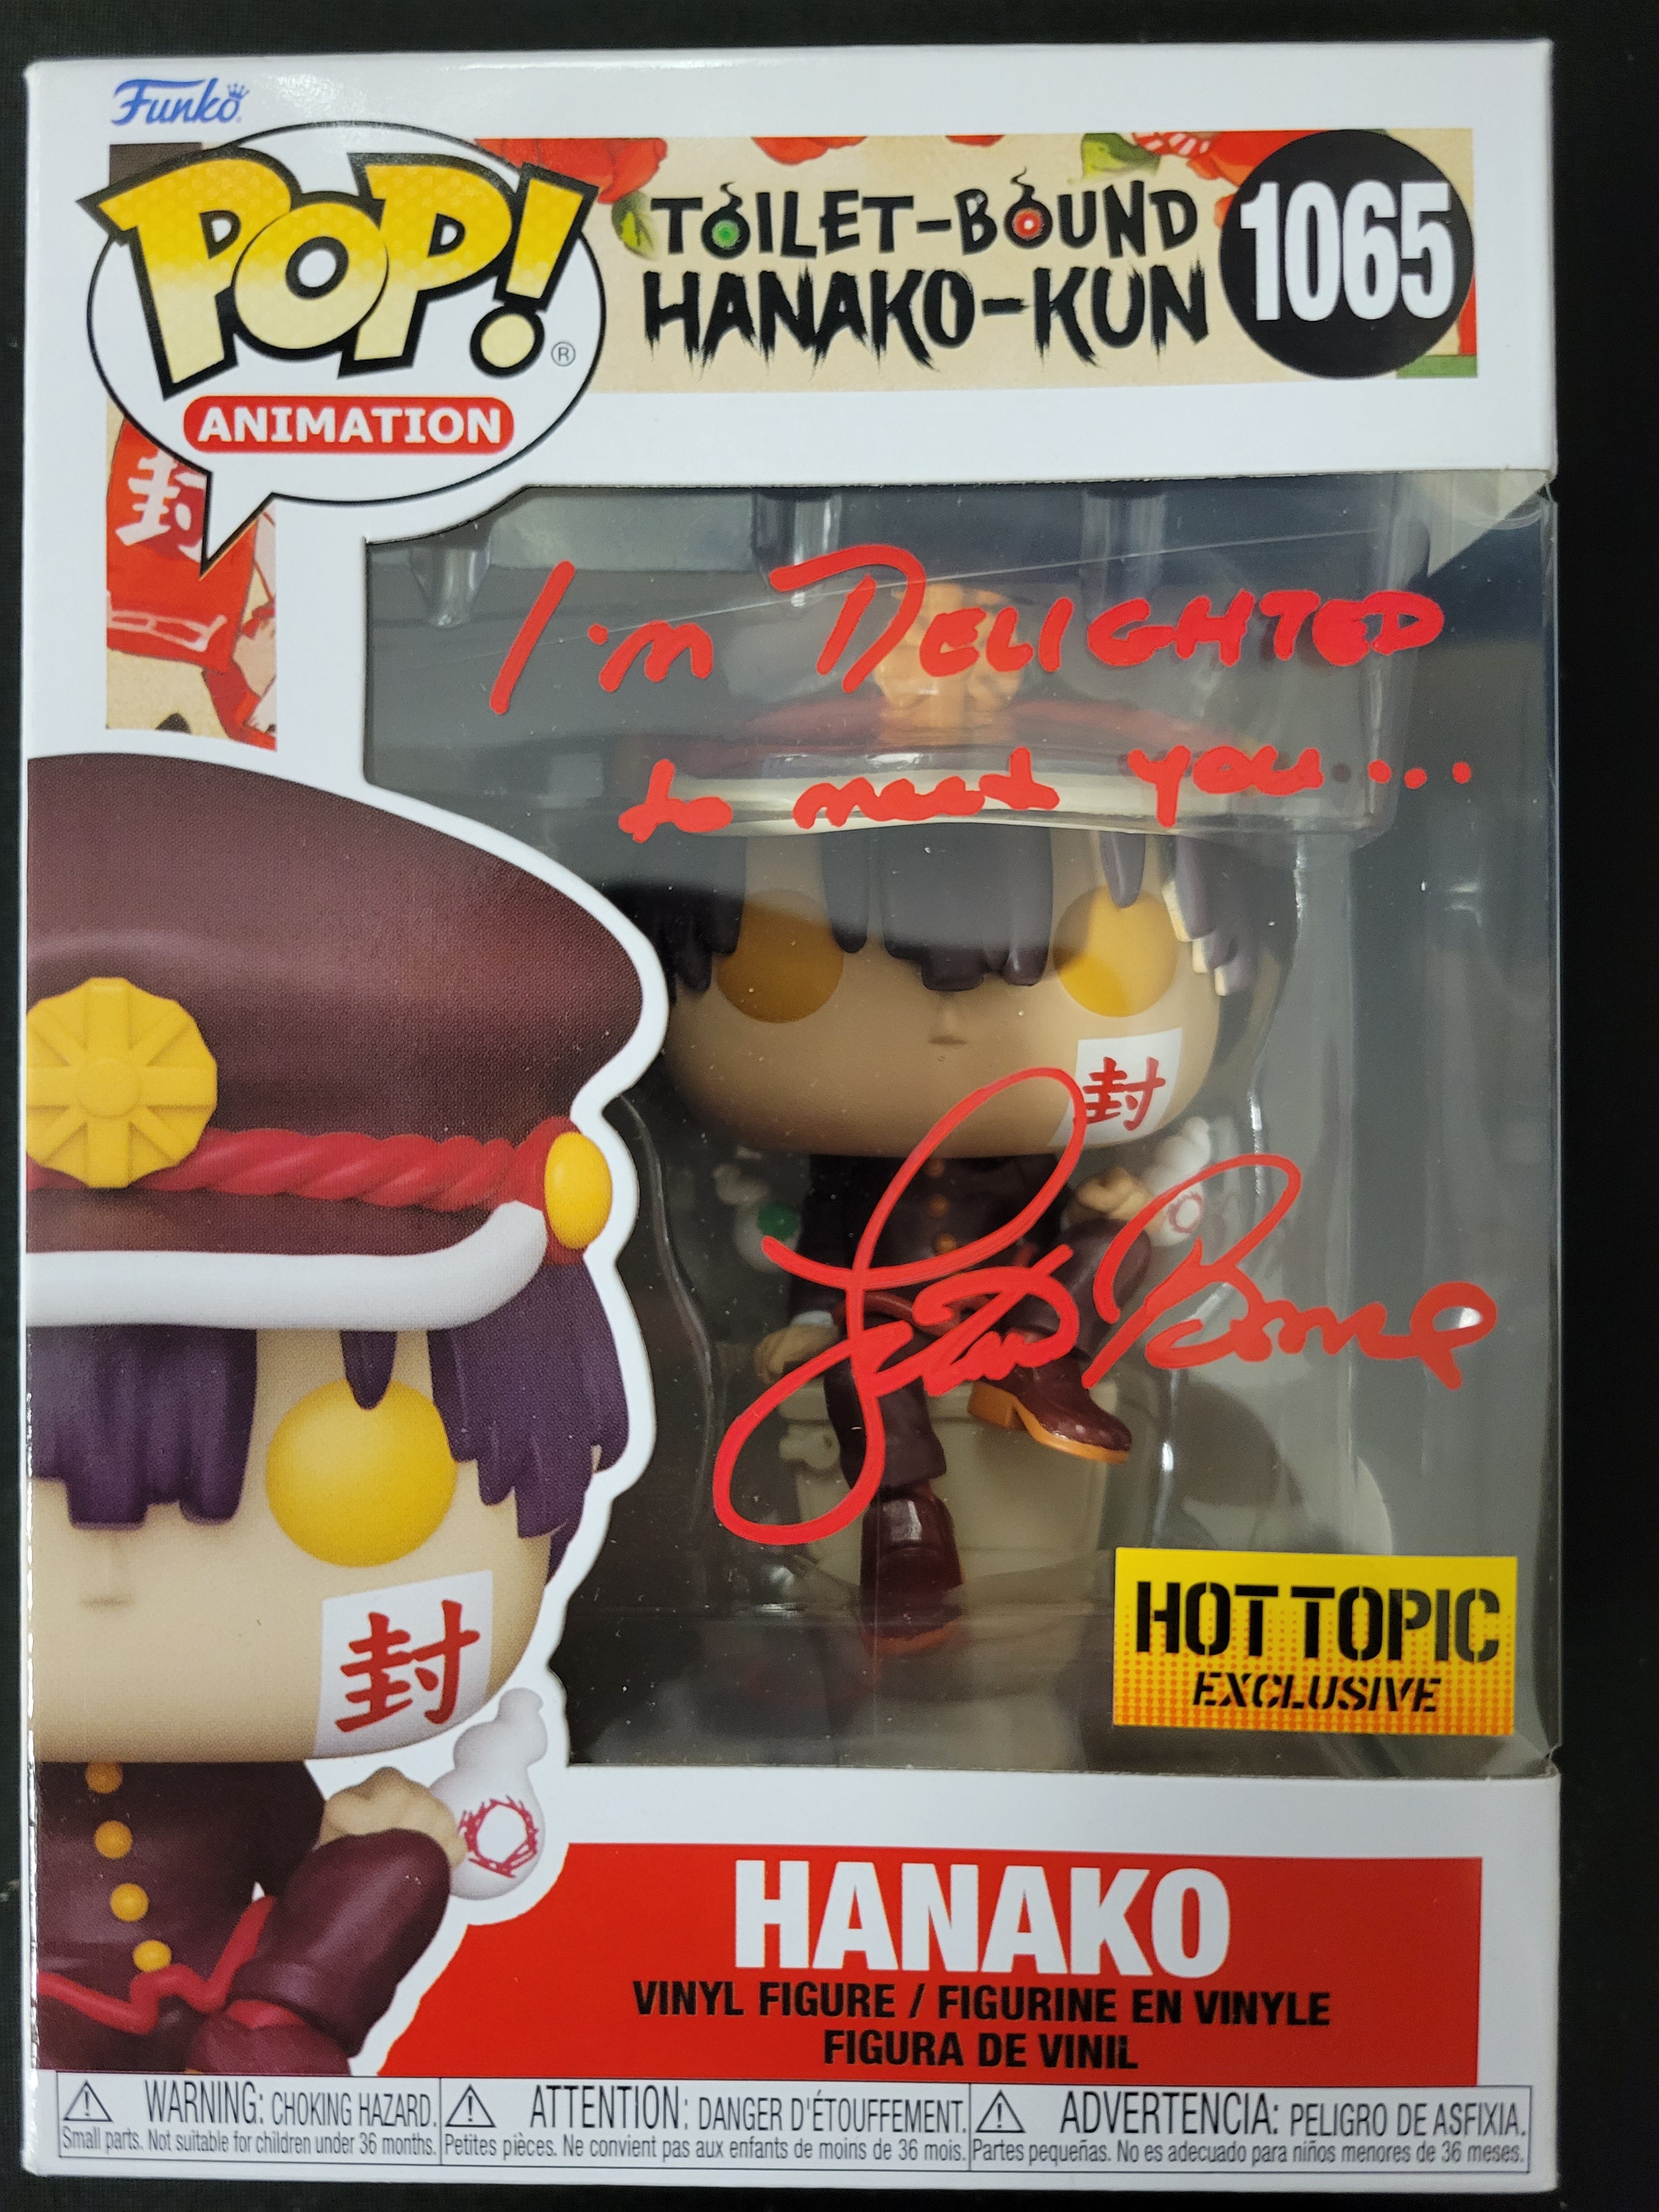 Funko Pop: #1065 Toilet Bound Hanako Autographed by Justin Briner - JSA Cert 675